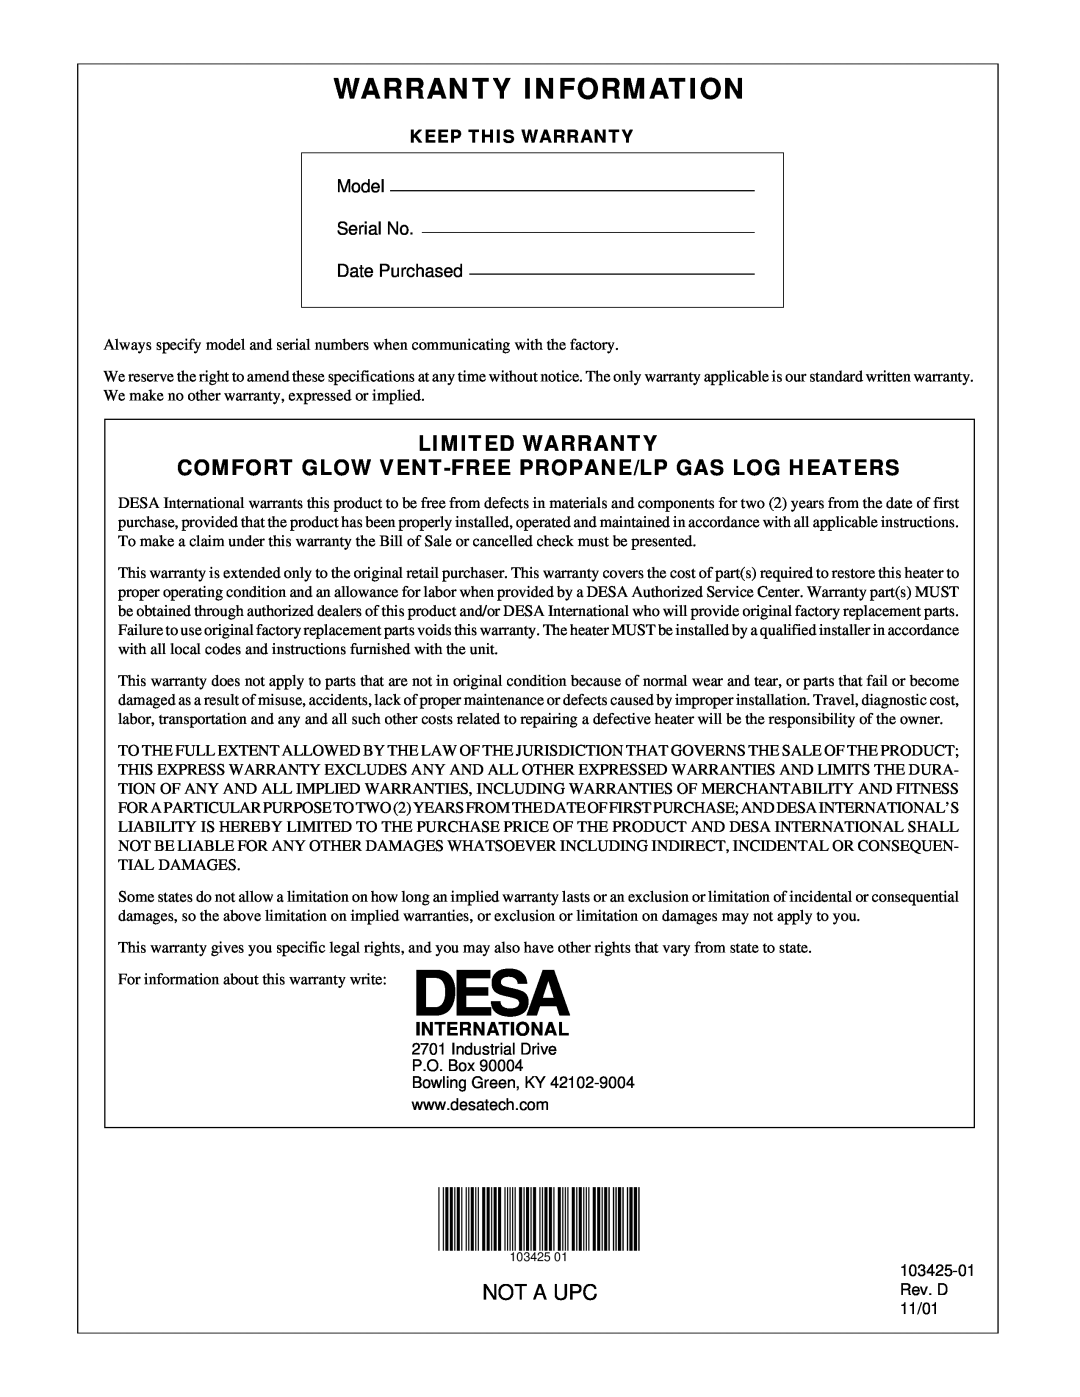 Desa Tech CGG2618P Warranty Information, Limited Warranty Comfort Glow Vent-Free Propane/Lp Gas Log Heaters, Not A Upc 